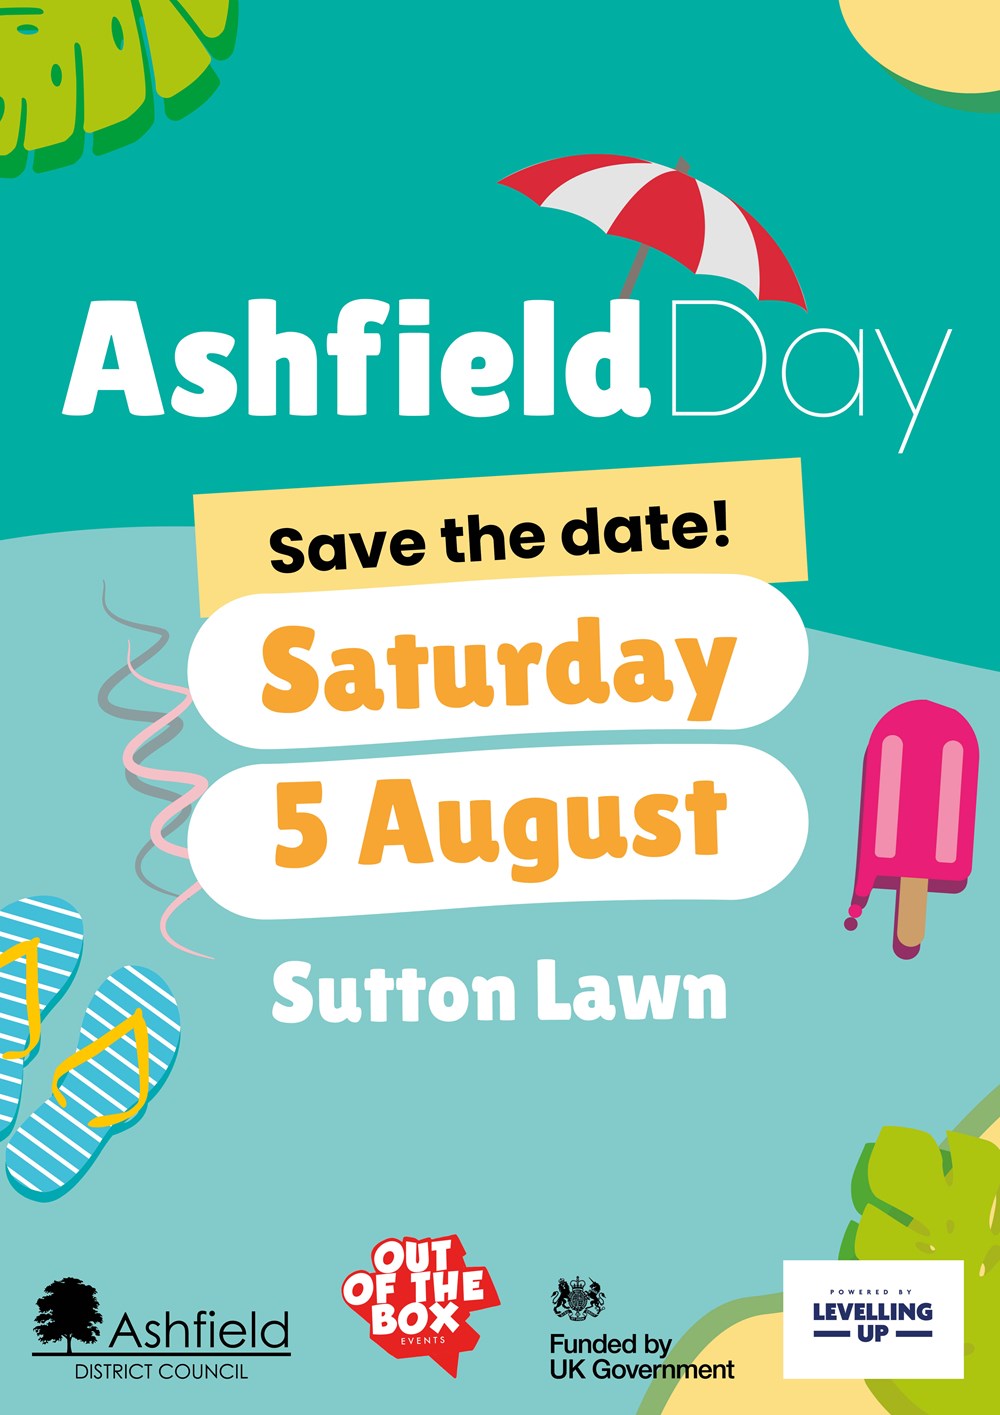 Ashfield Day on Saturday 5 August 